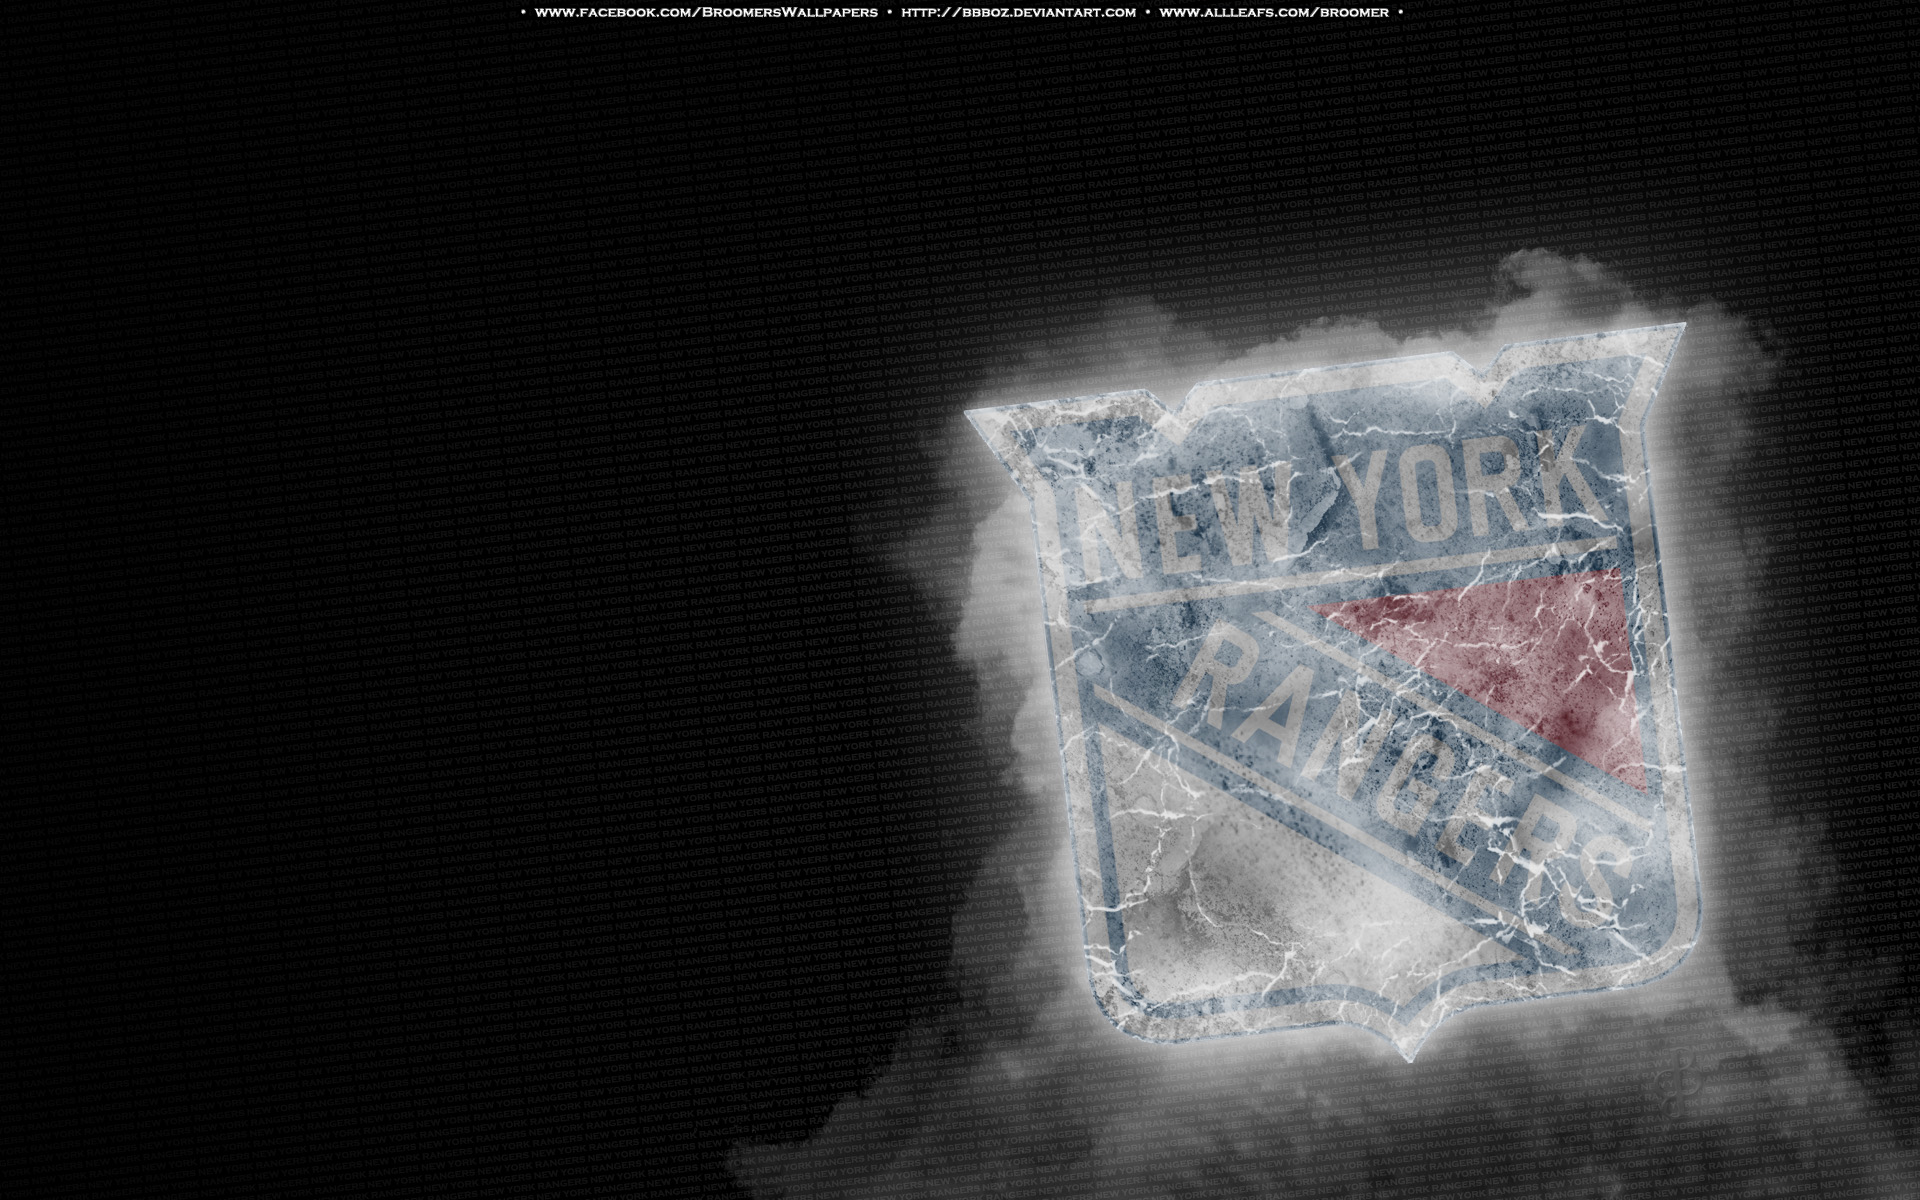 New York Rangers HD Wallpaper Background Image Id